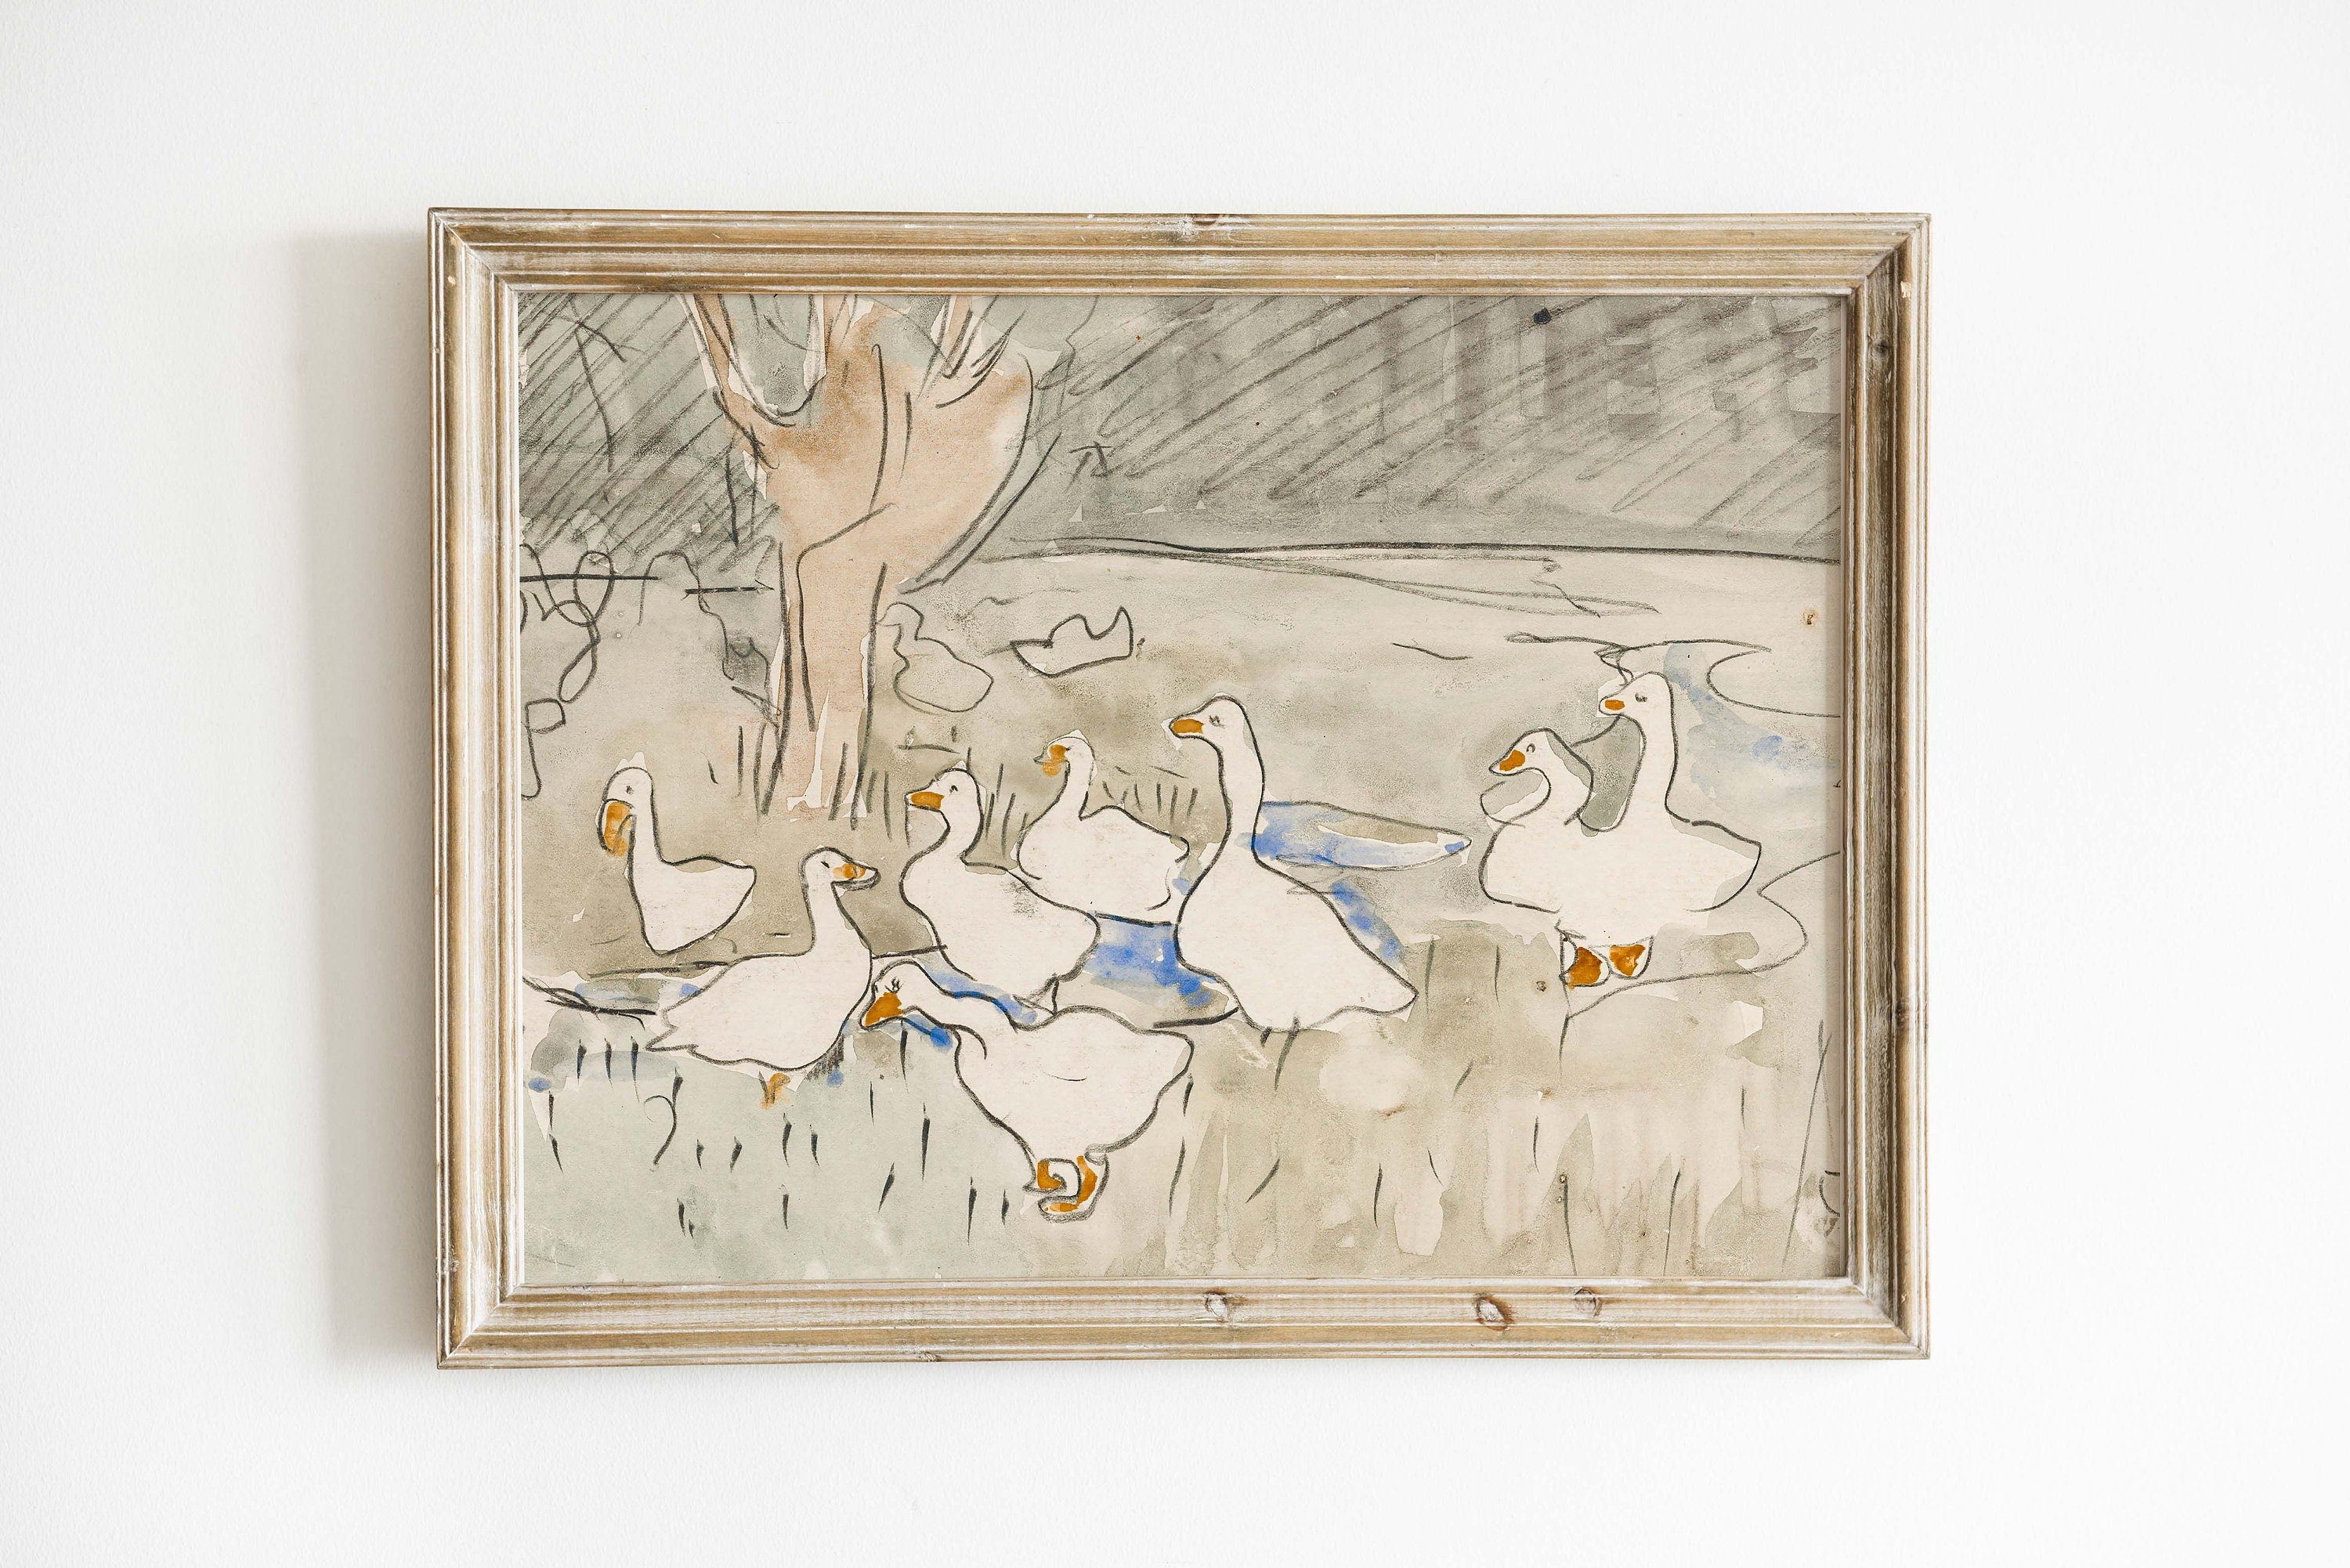 The Dutch artist Theo van Hoytema painted this beautiful spring Duck artwork